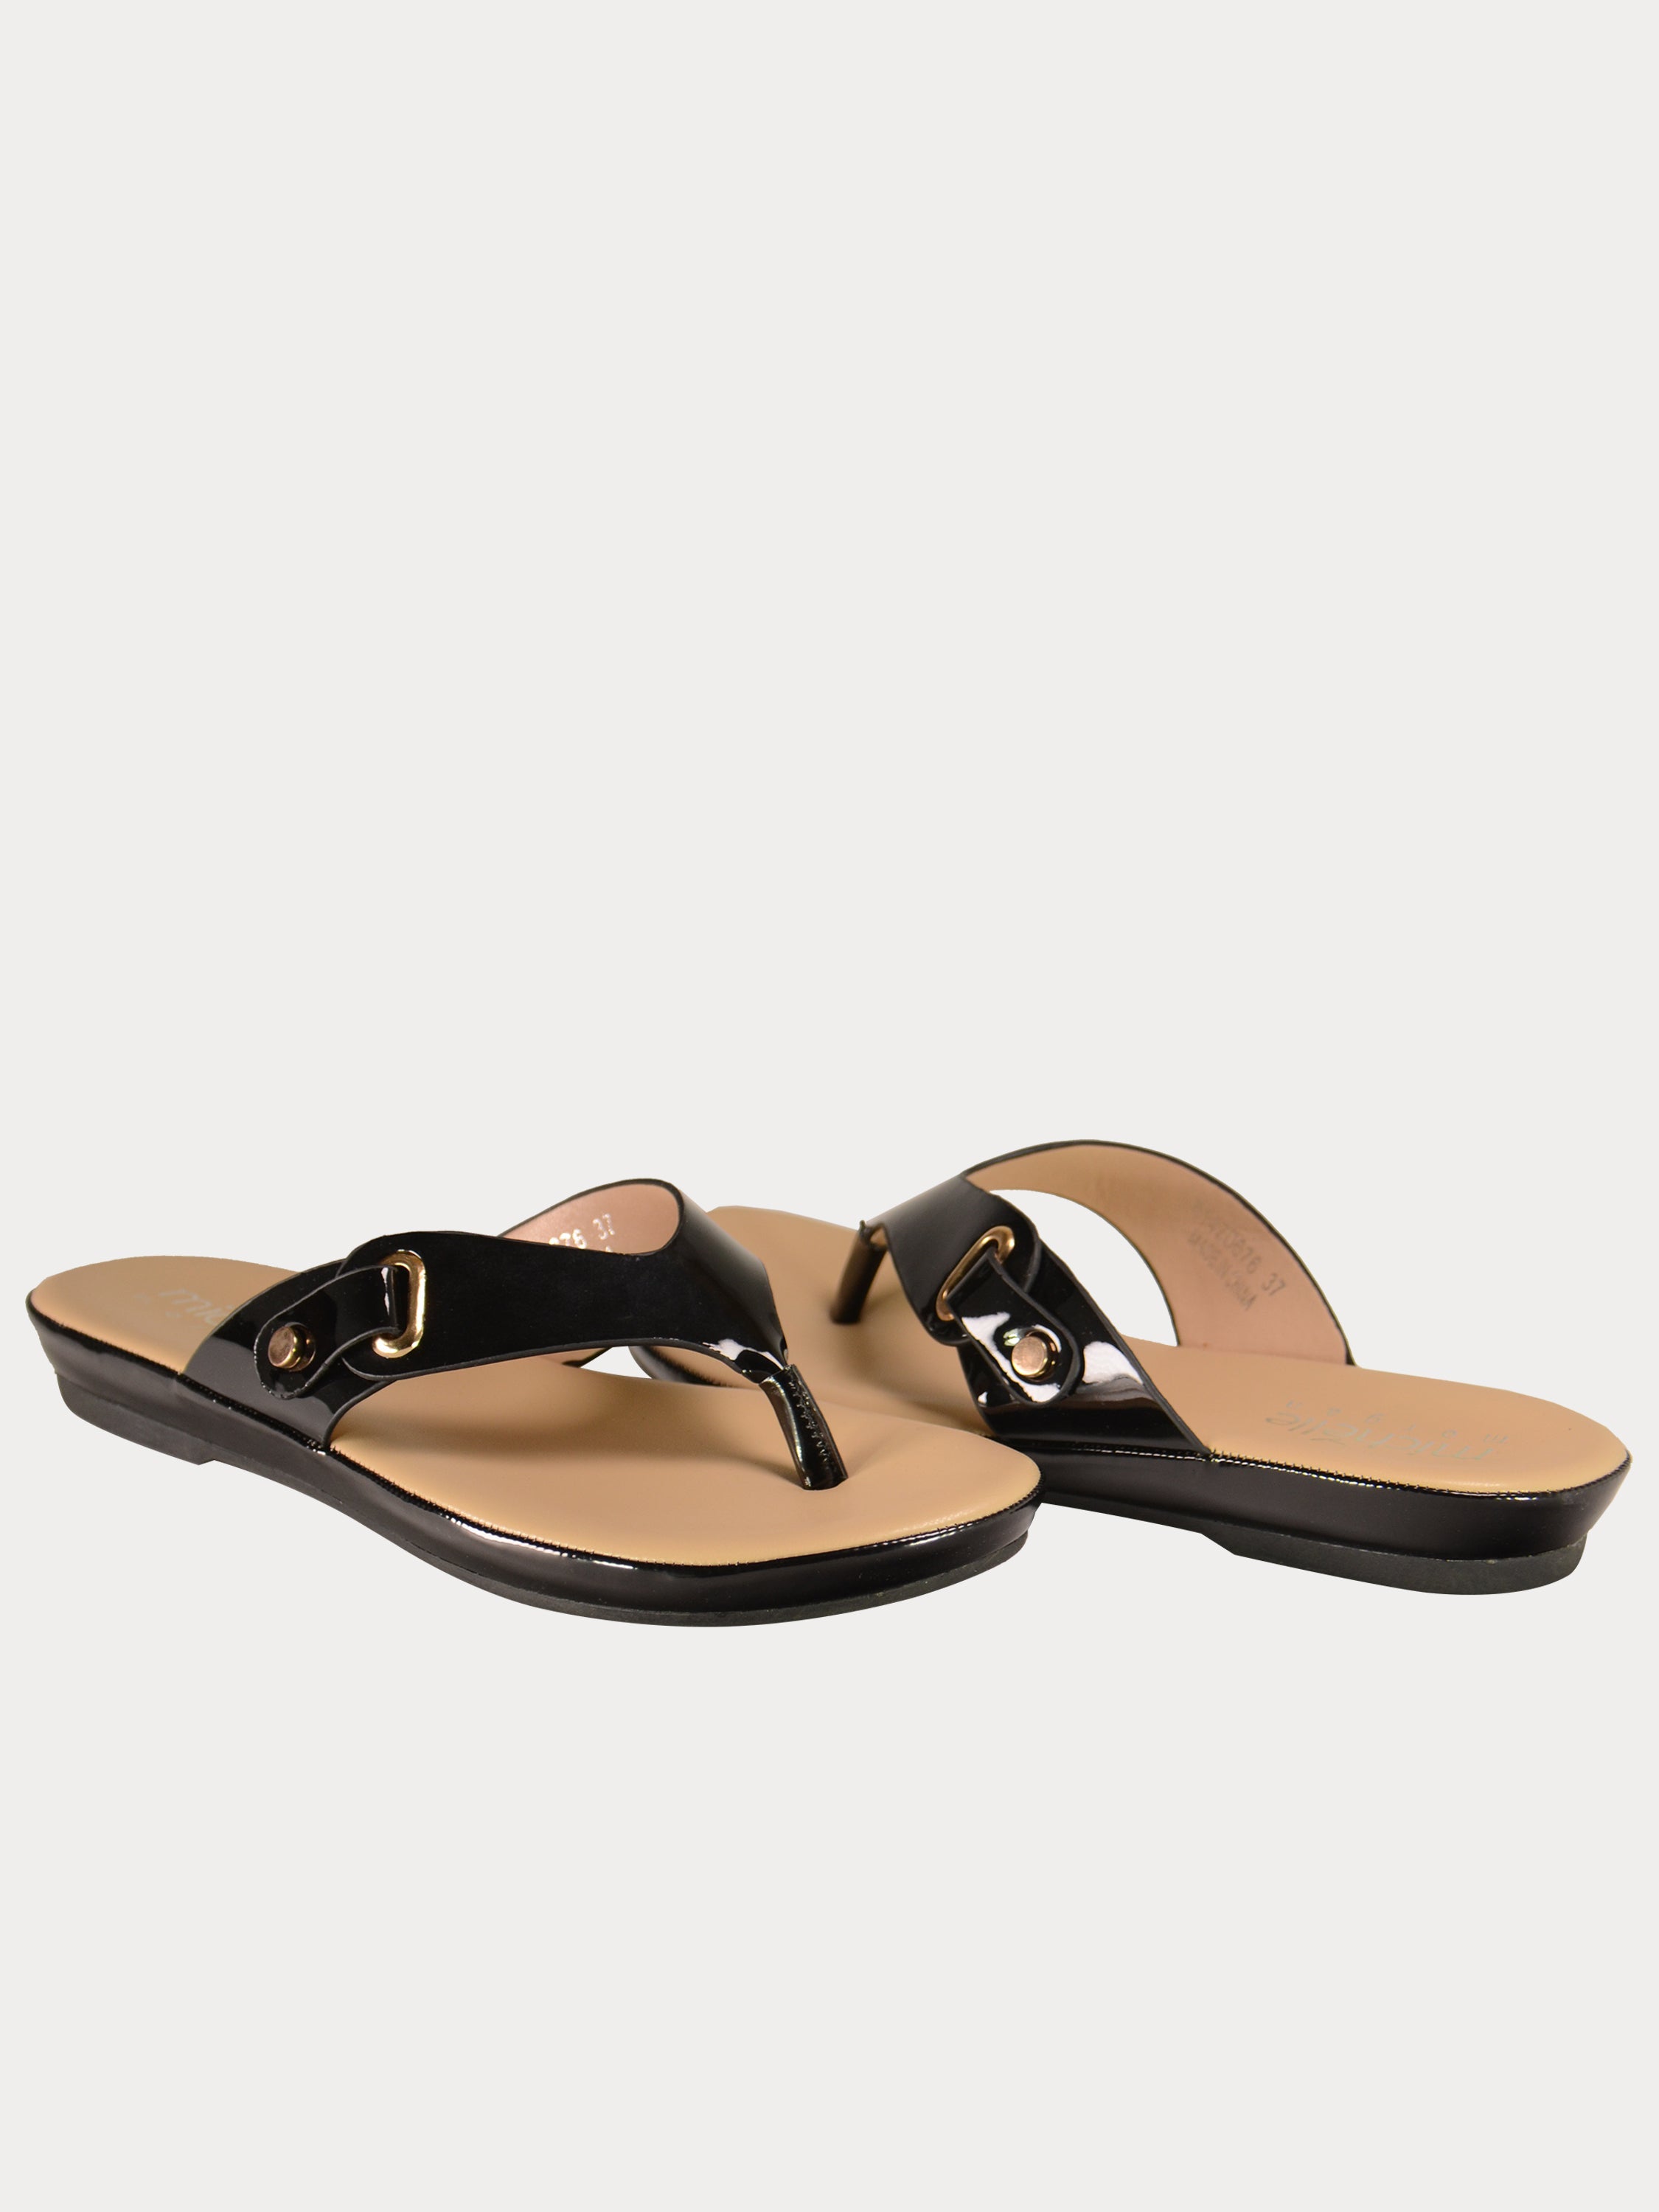 Michelle Morgan 814676 Women's Slider Sandals #color_Black